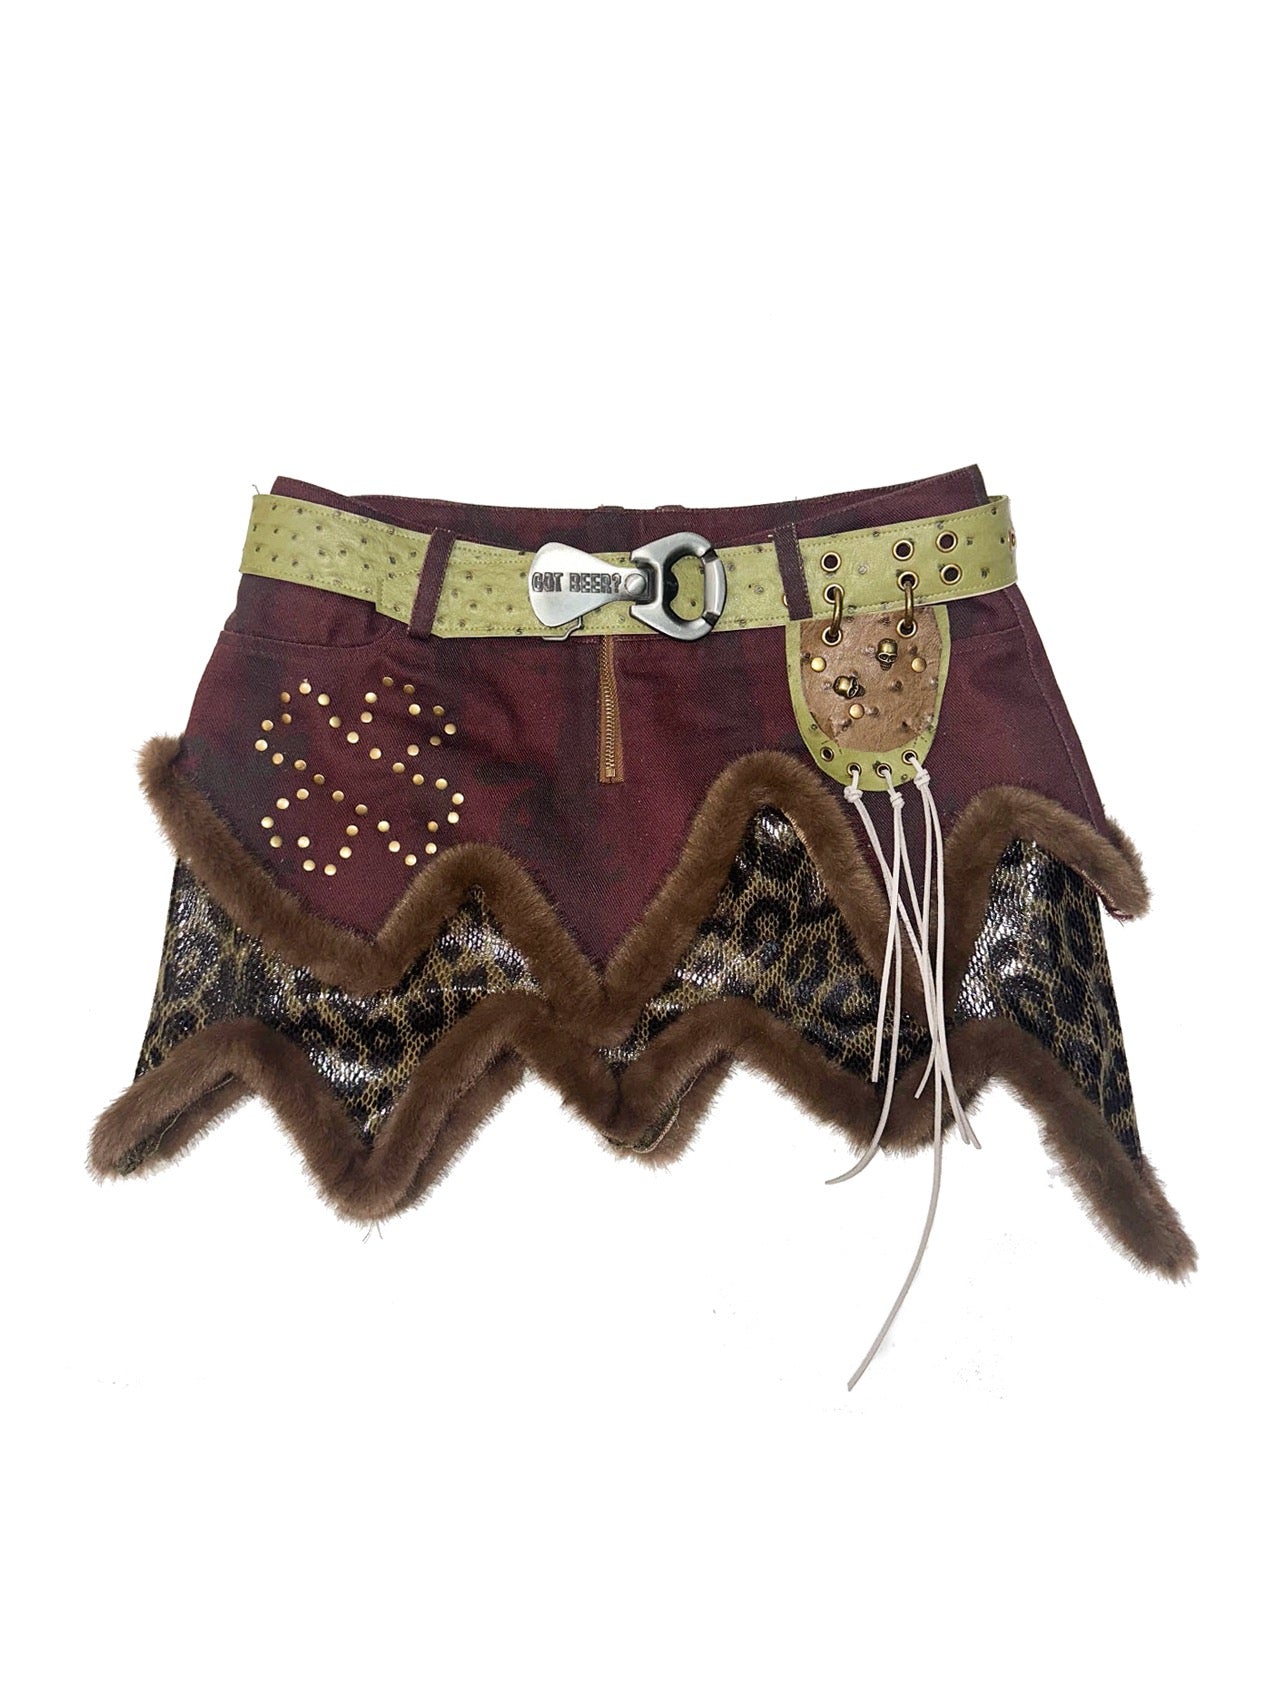 Faux leather denim double stitching skirt + belt